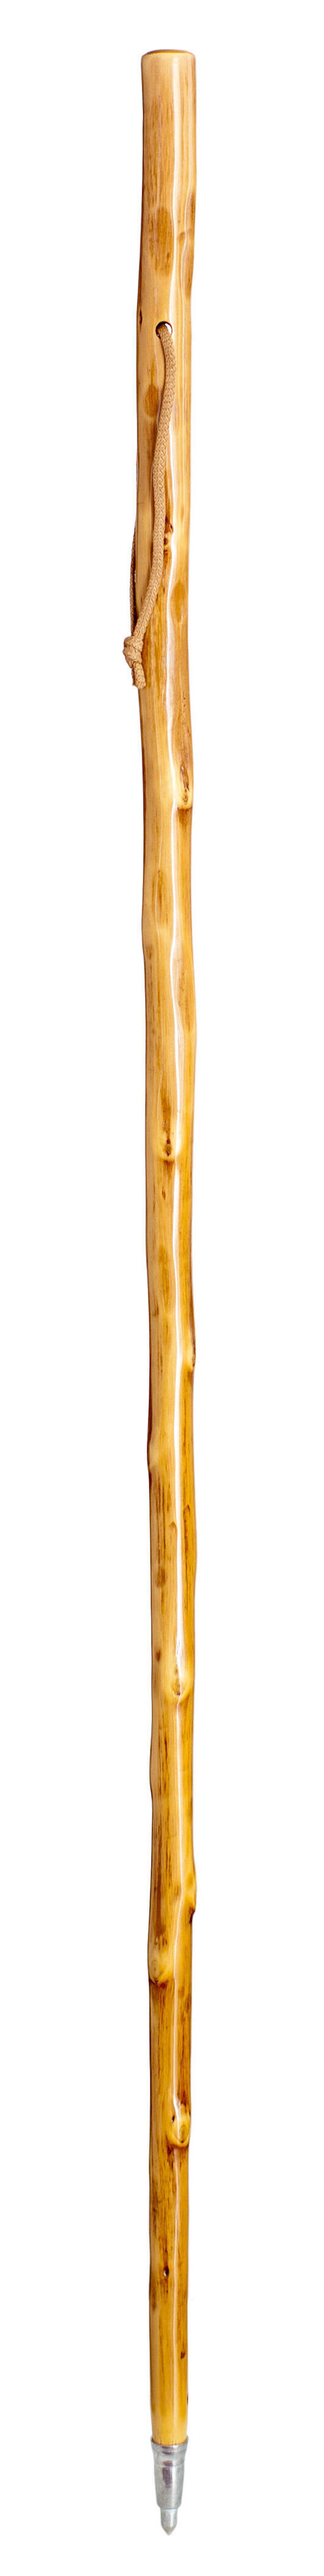 Bastón de senderismo madera castaño 110cm